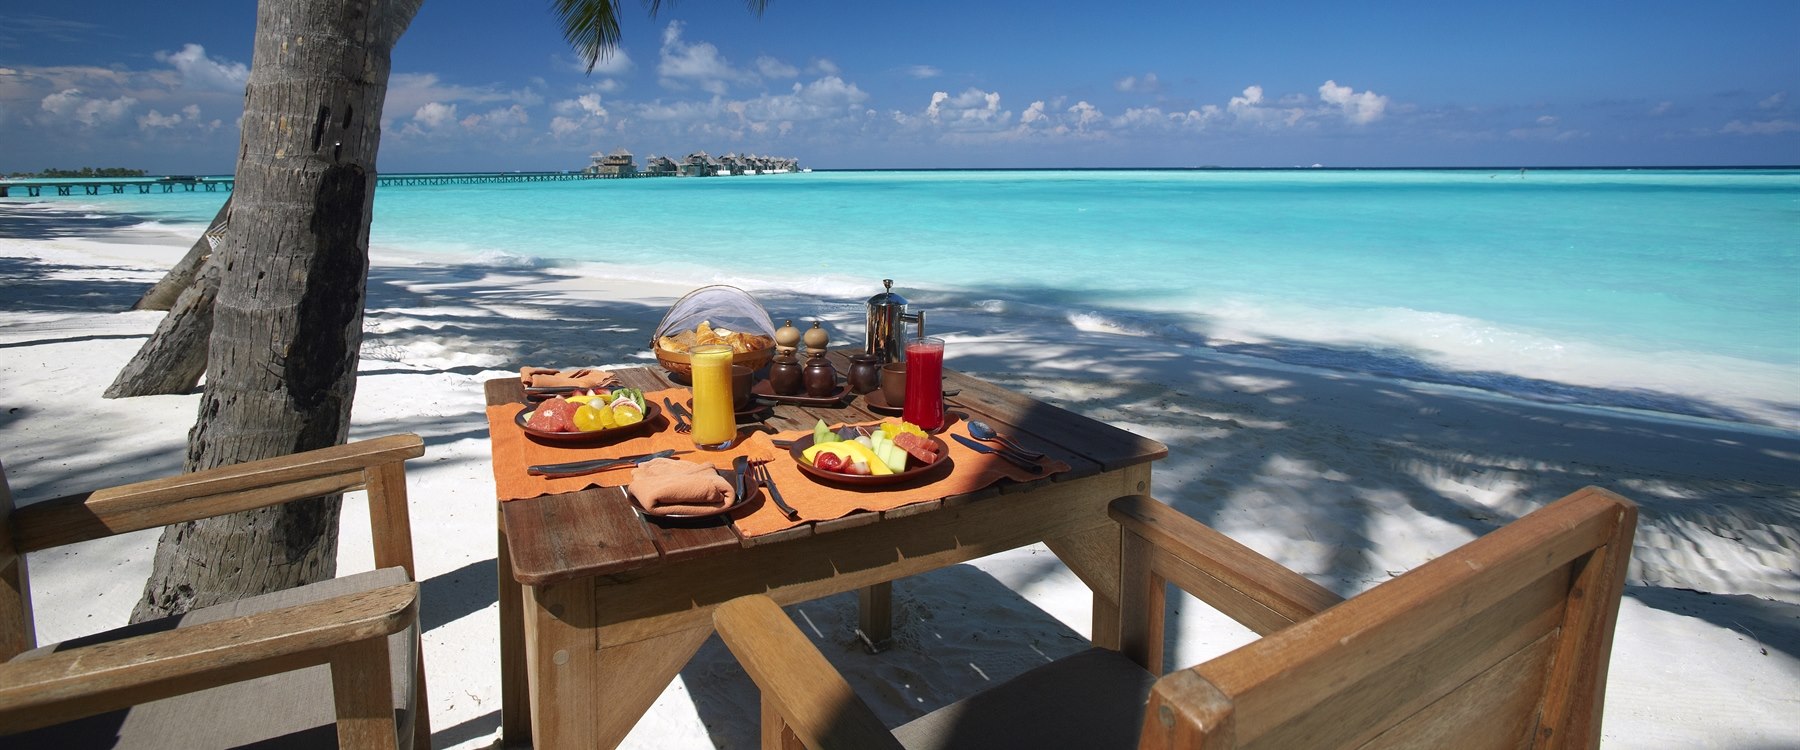 Breakfast by the beach at Gili Lankanfushi, Maldives